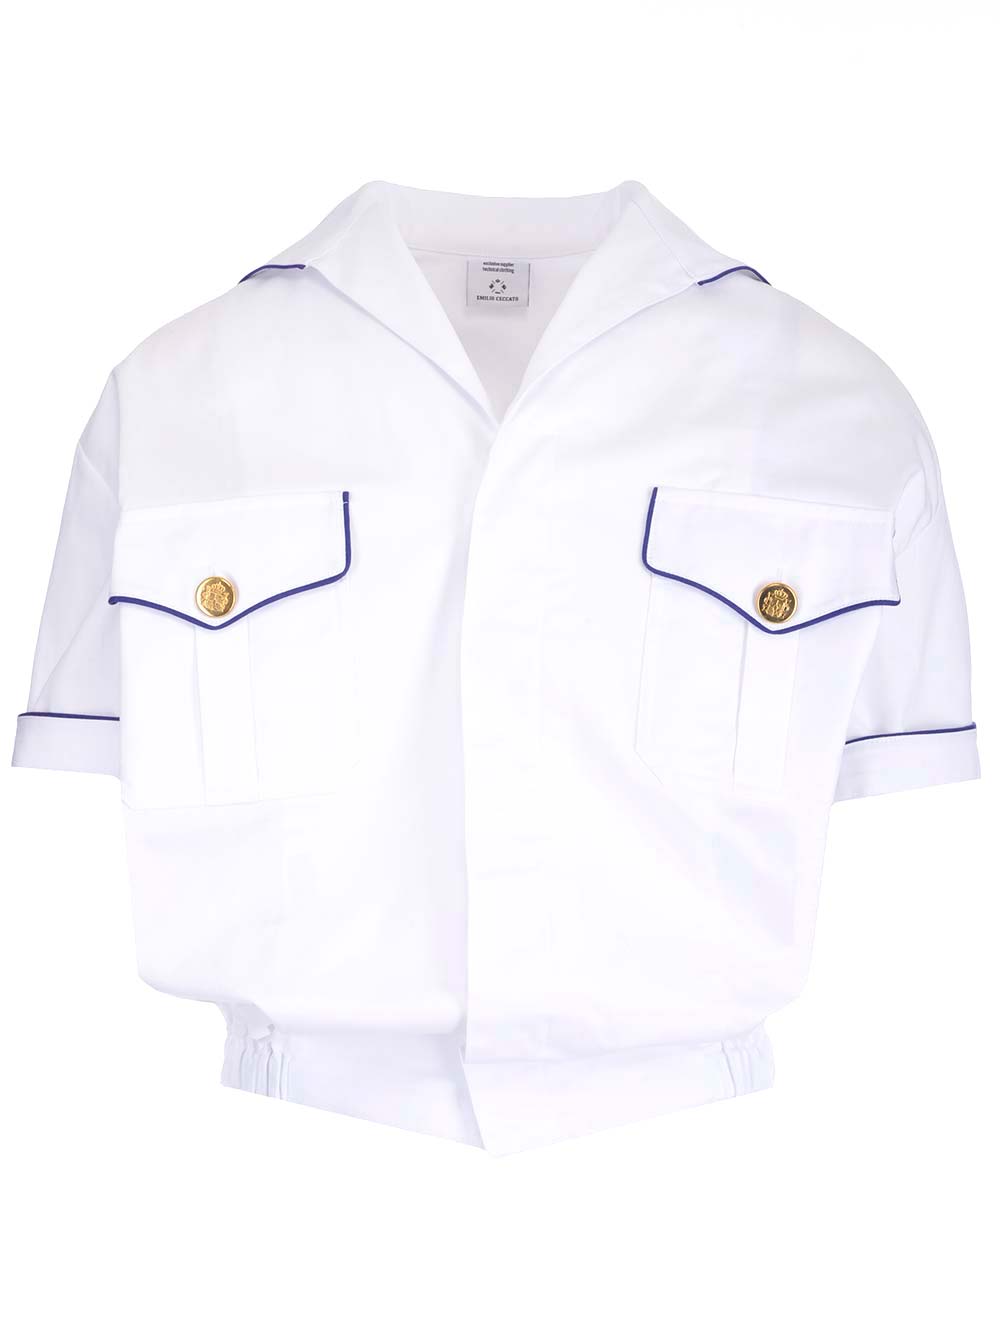 Sailor tunic